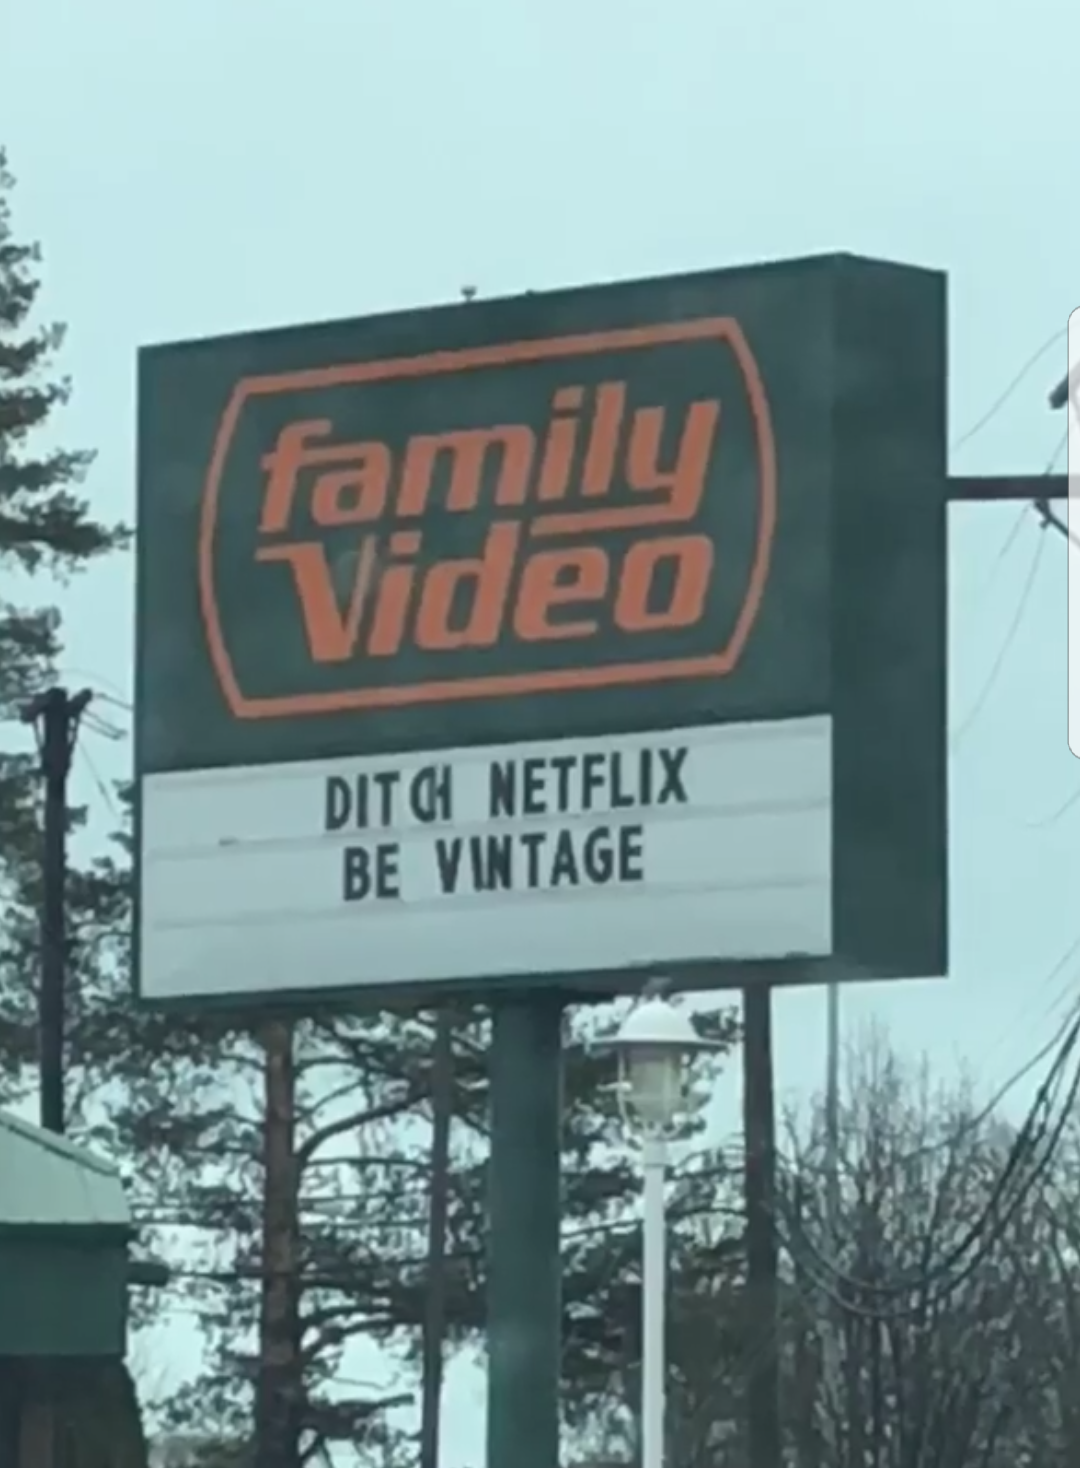 Ditch Netflix be vintage